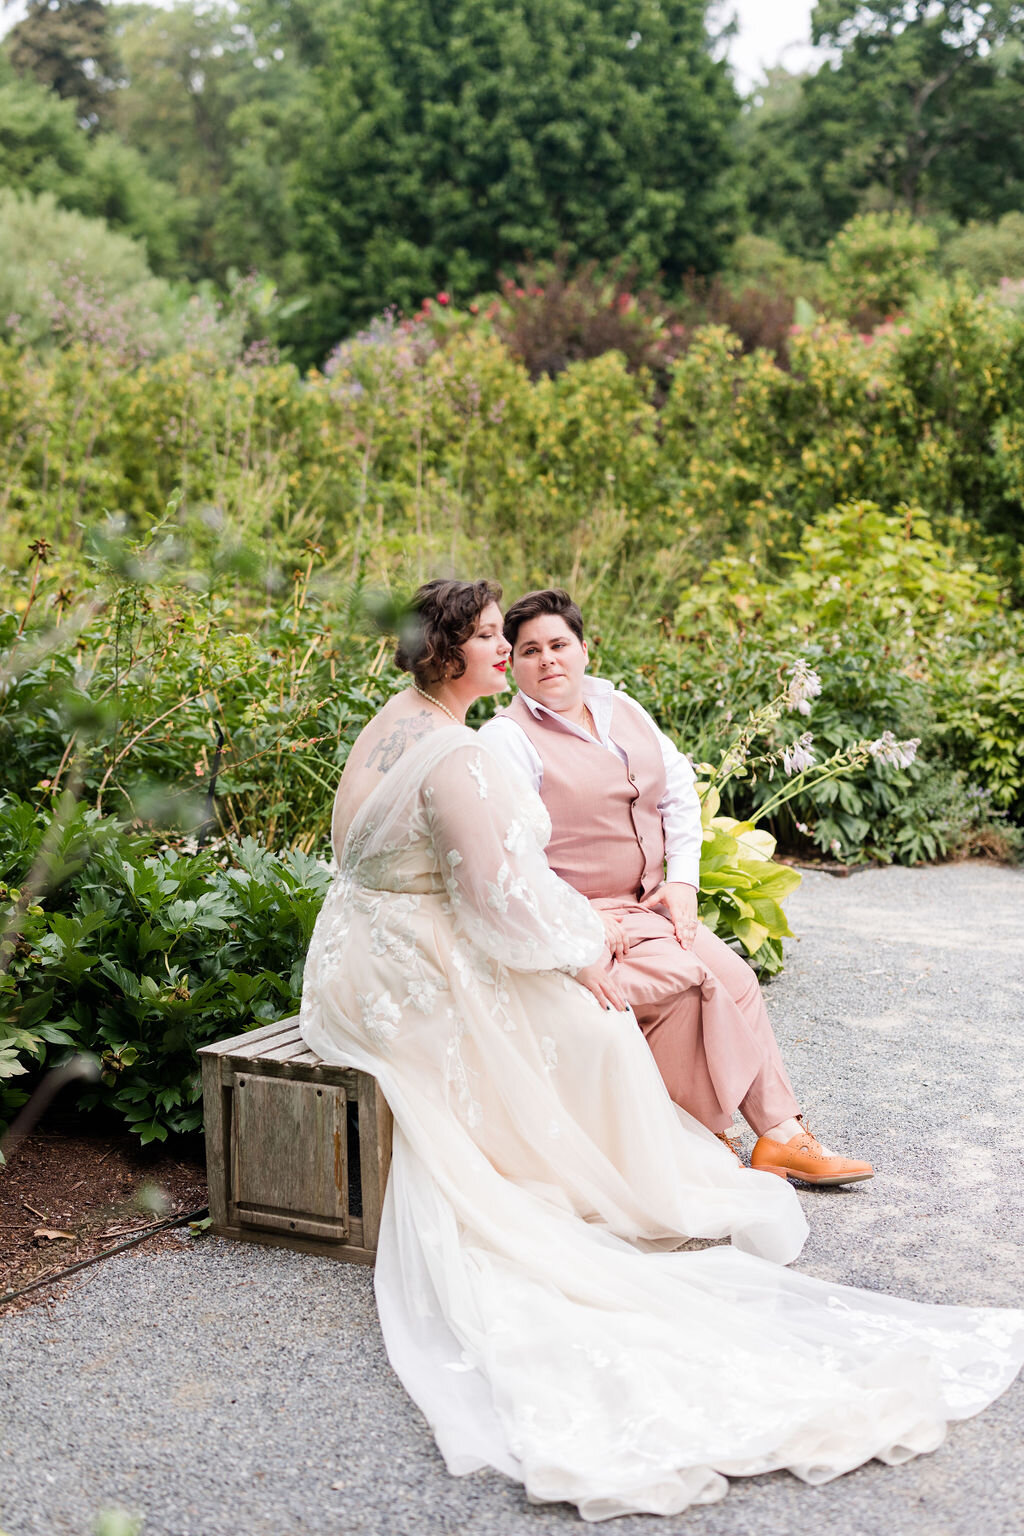 Longwood-Gardens-Lesbian-Wedding-Photos-byLGBTQ-owned-photography-company-Swiger-Photography-9.jpg